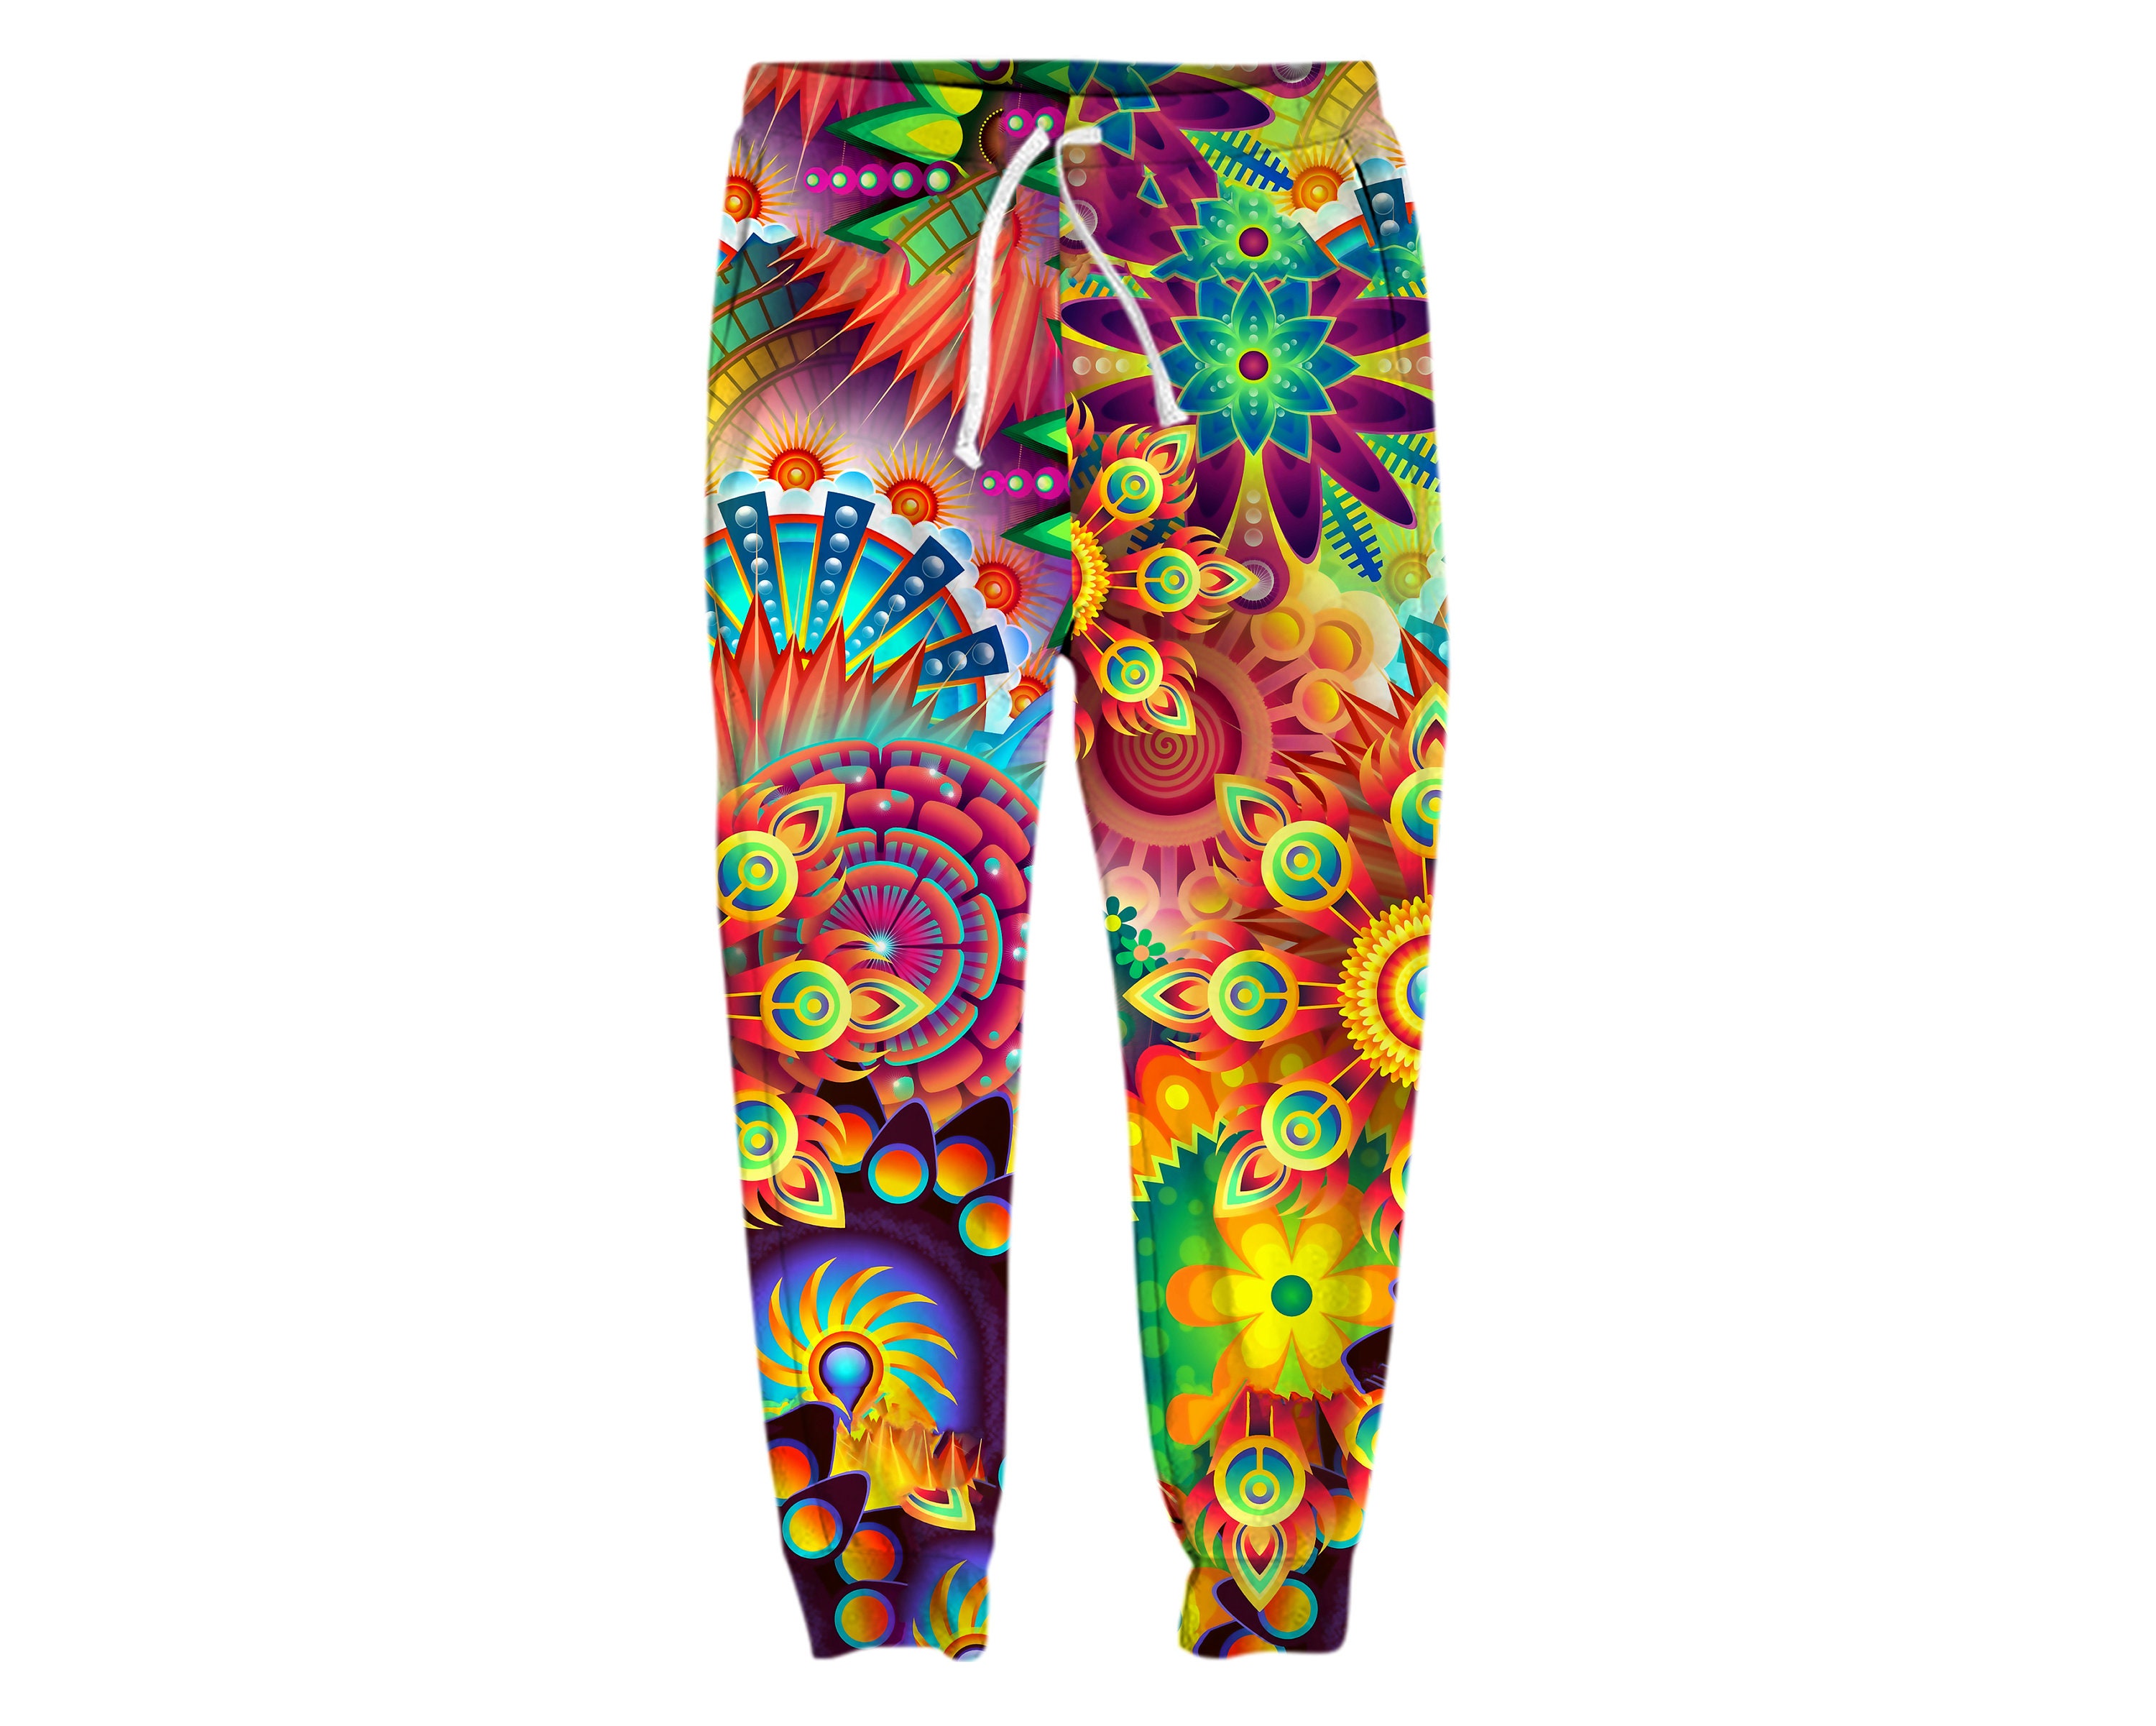 Reflective Pants, Glow Pants, Holographic Glow Pants, Festival Pants,  Rainbow Pants, Party Pants, Psychedelic Pants 